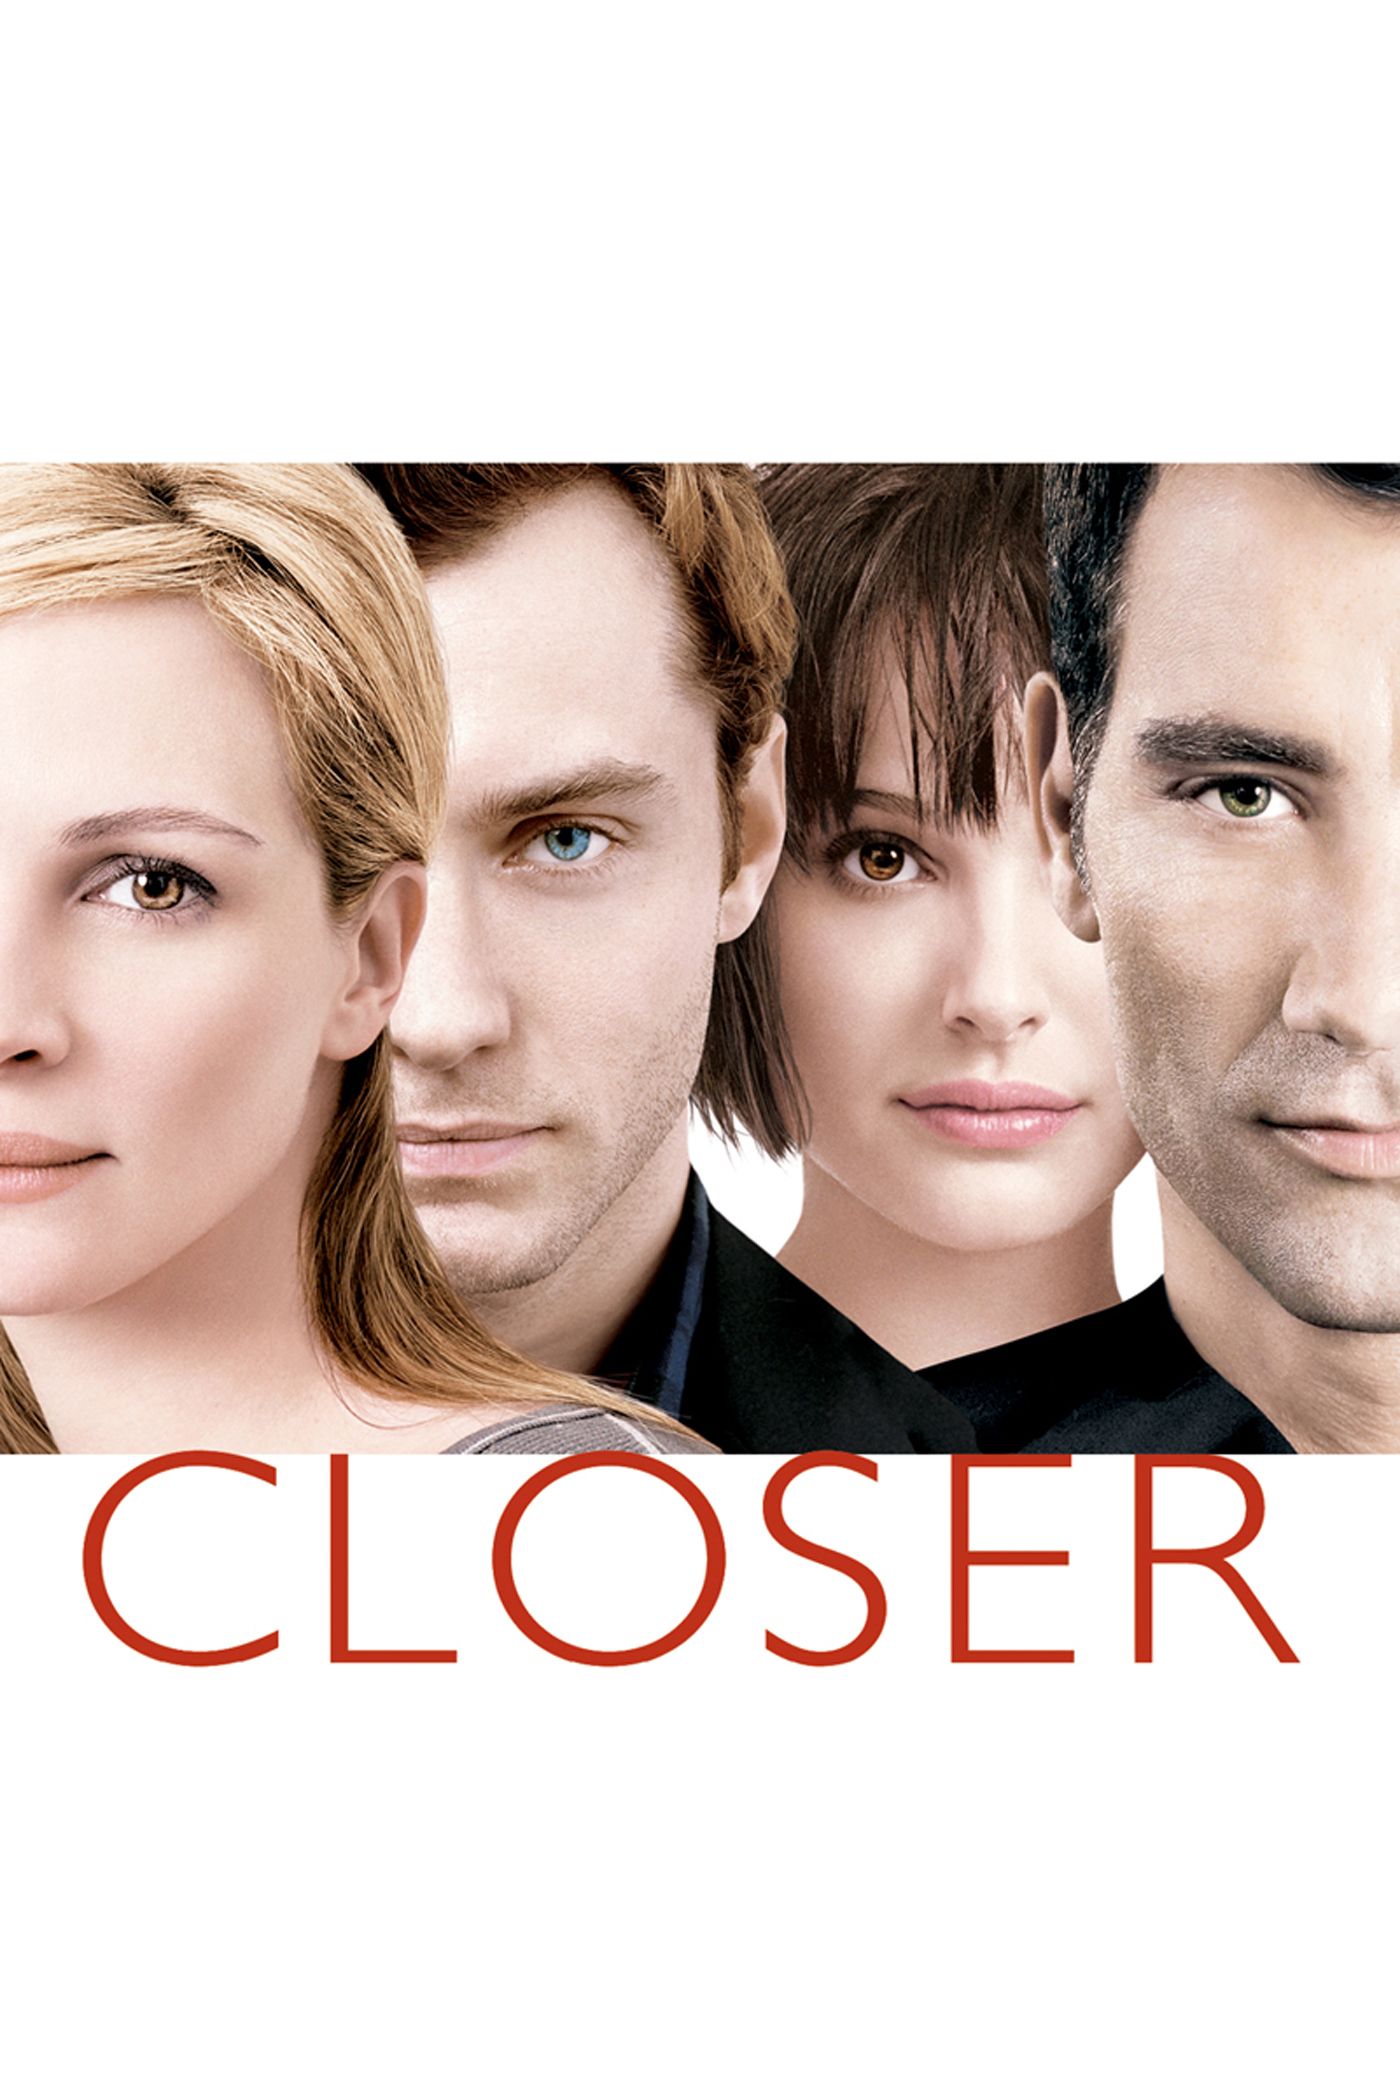 Closer 2004 full movie download